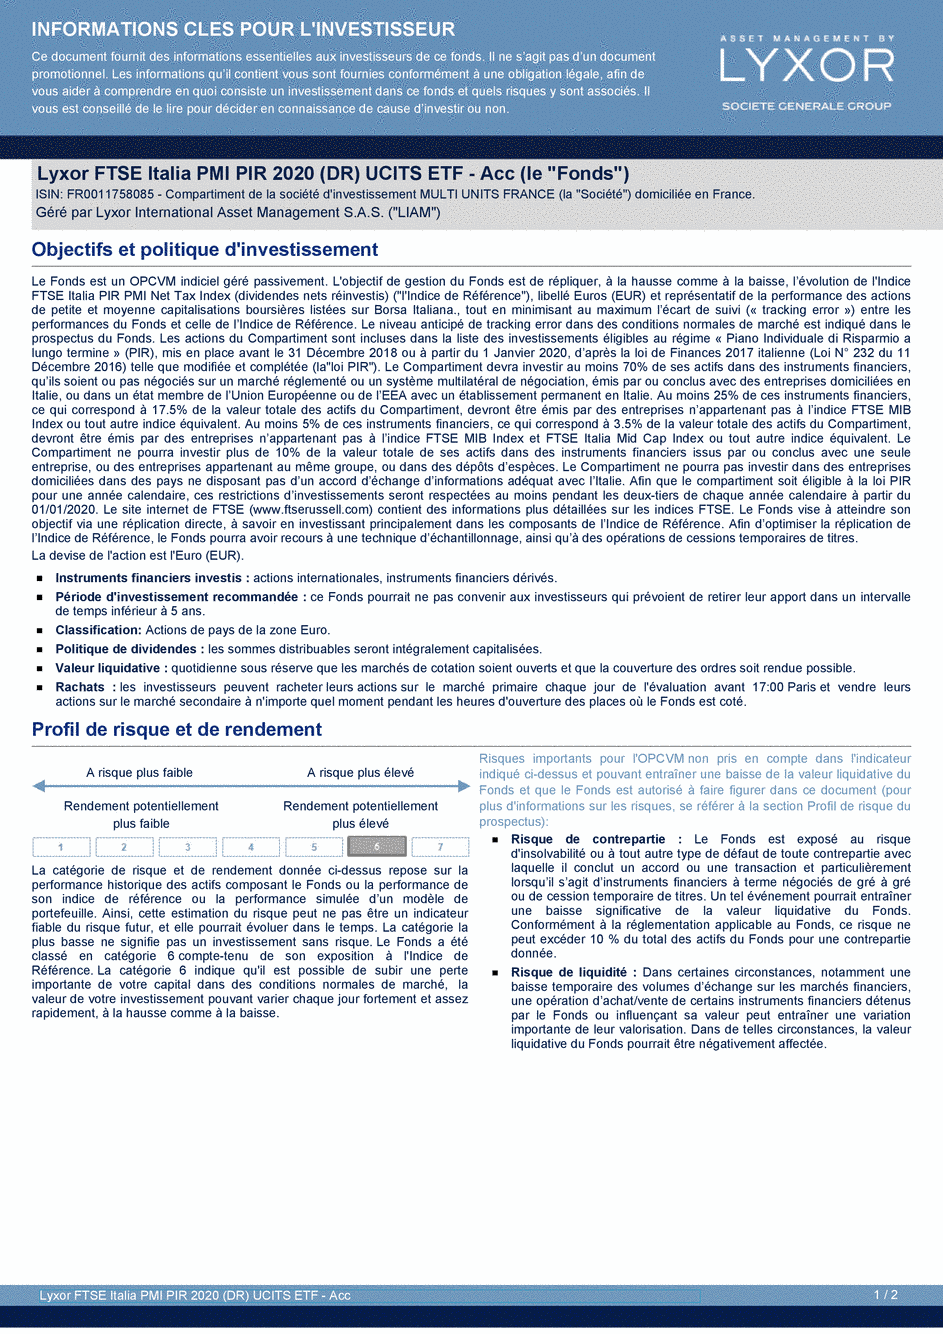 DICI Lyxor FTSE Italia PMI PIR 2020 (DR) UCITS ETF - Acc - 19/02/2021 - Français